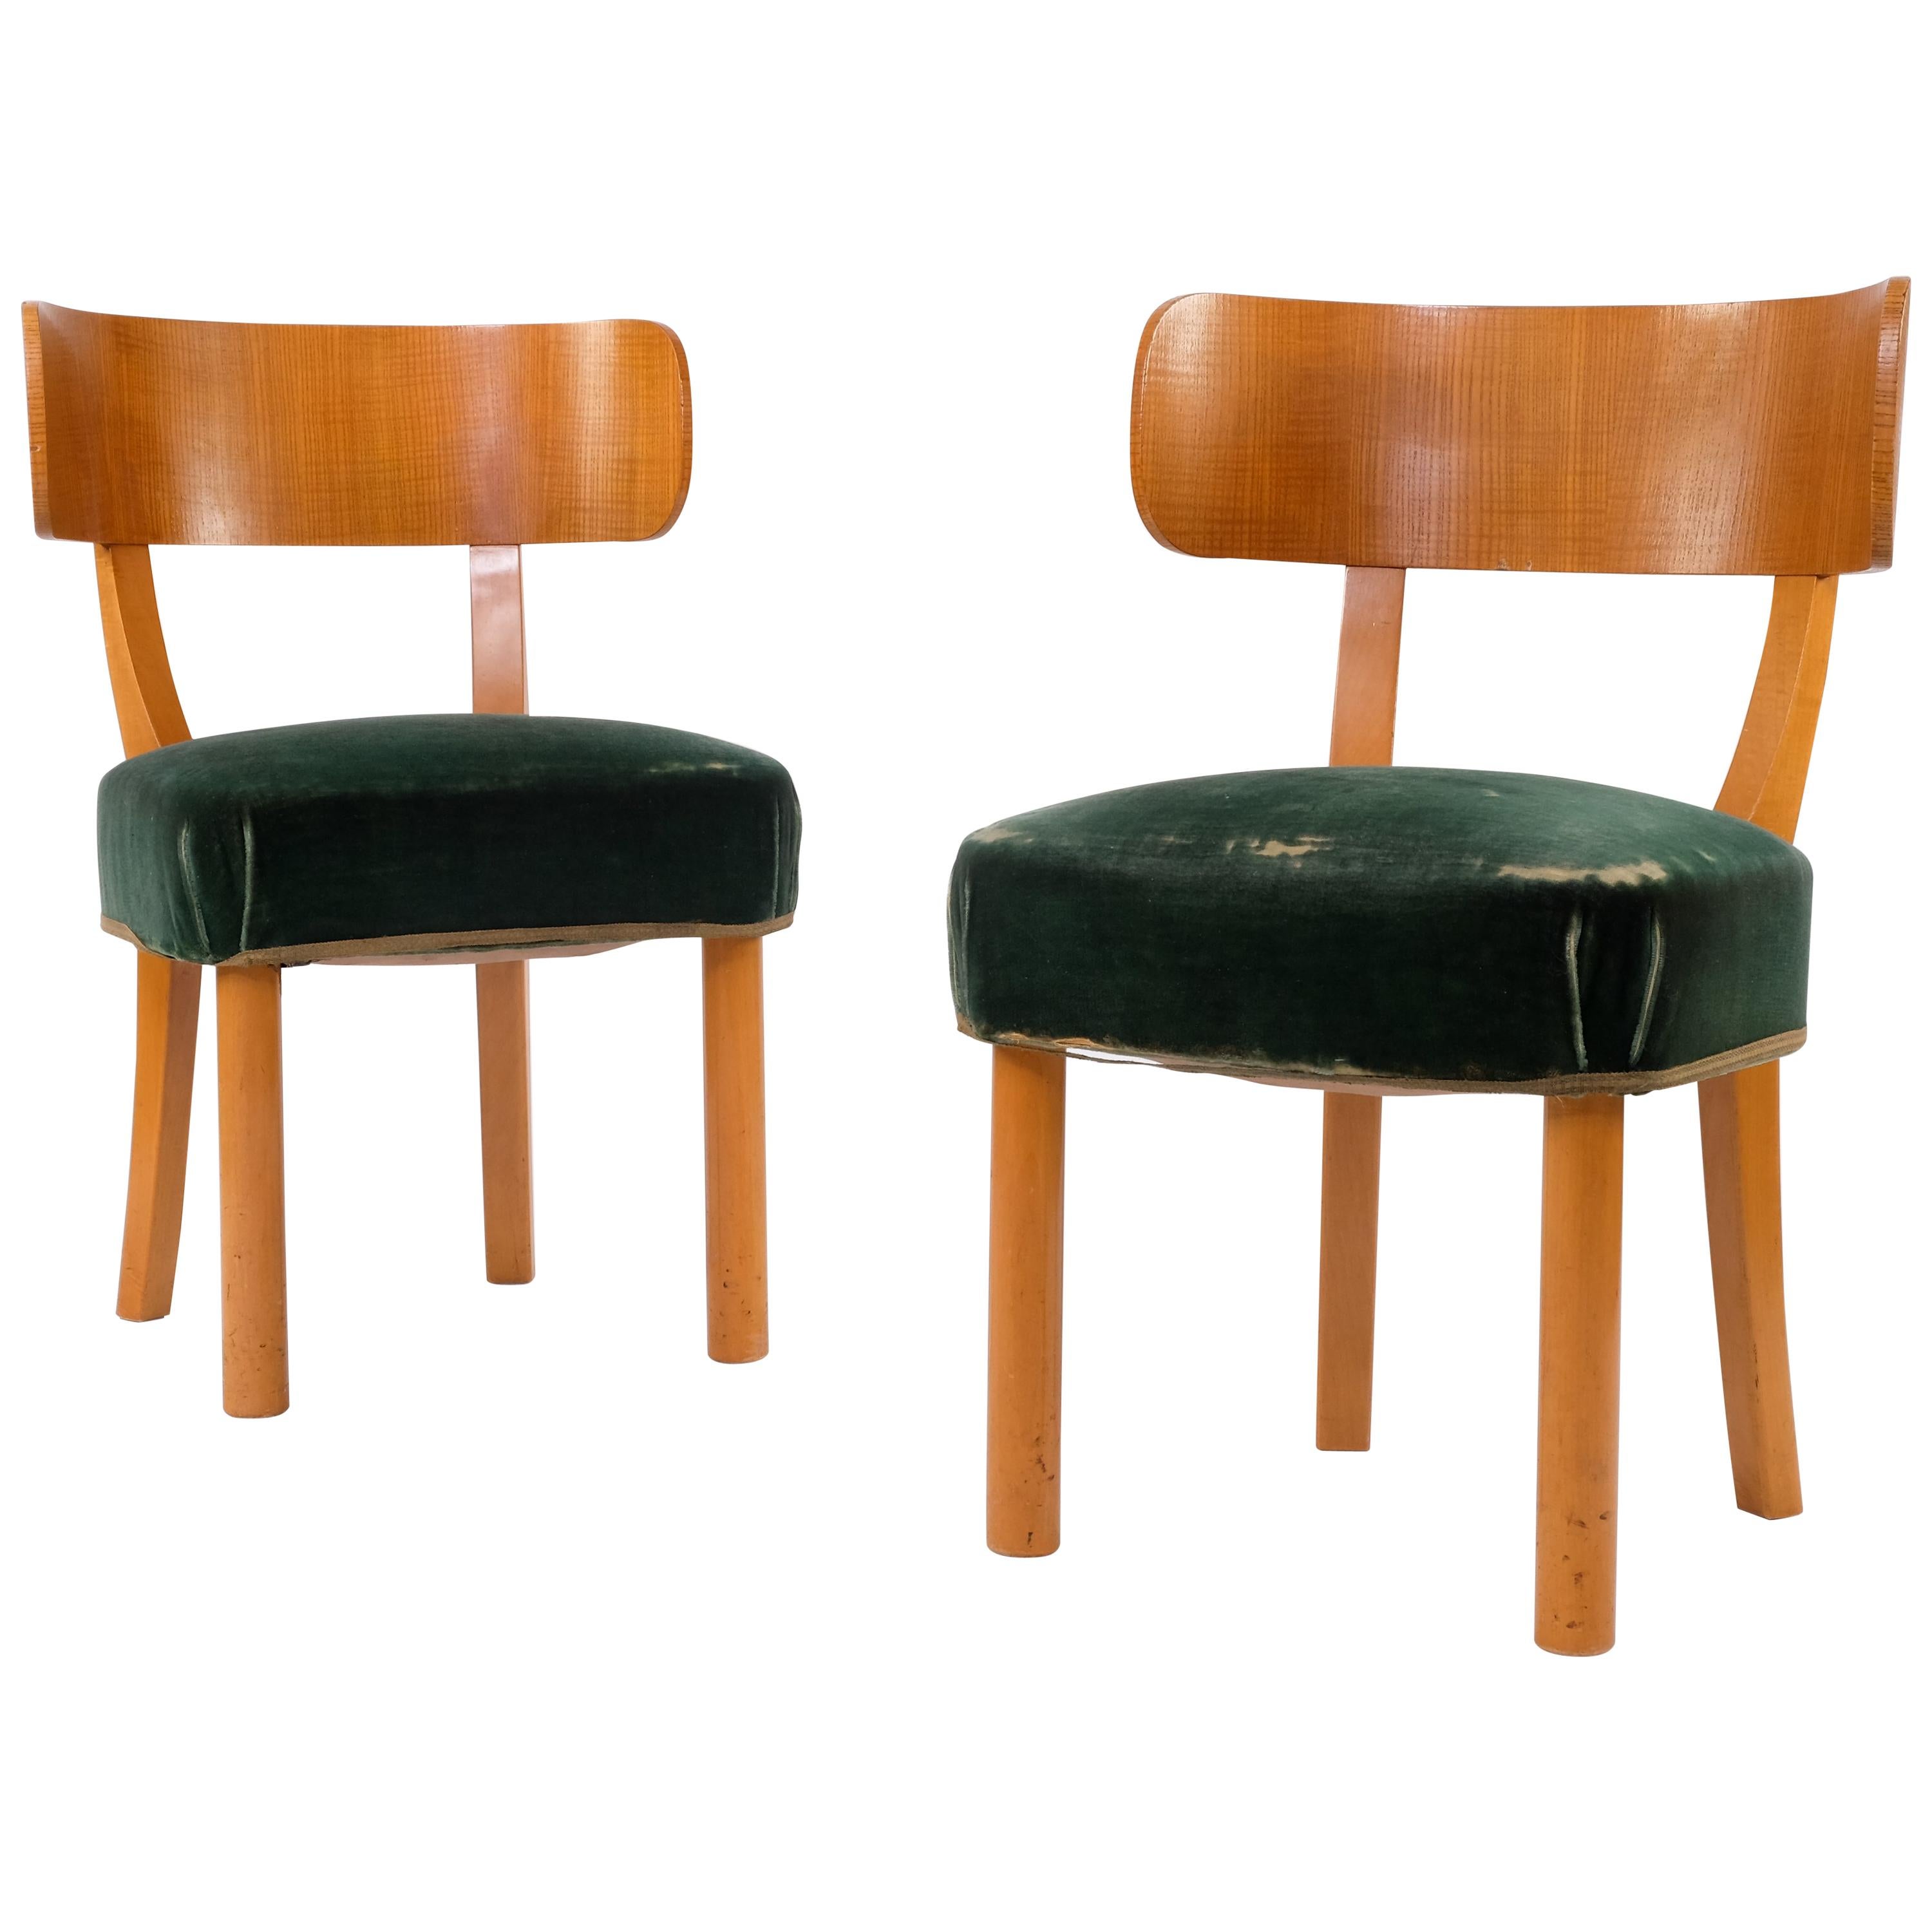 Pair of Axel-Einar Hjorth "Birka" Chairs by Nordiska Kompaniet, 1930s